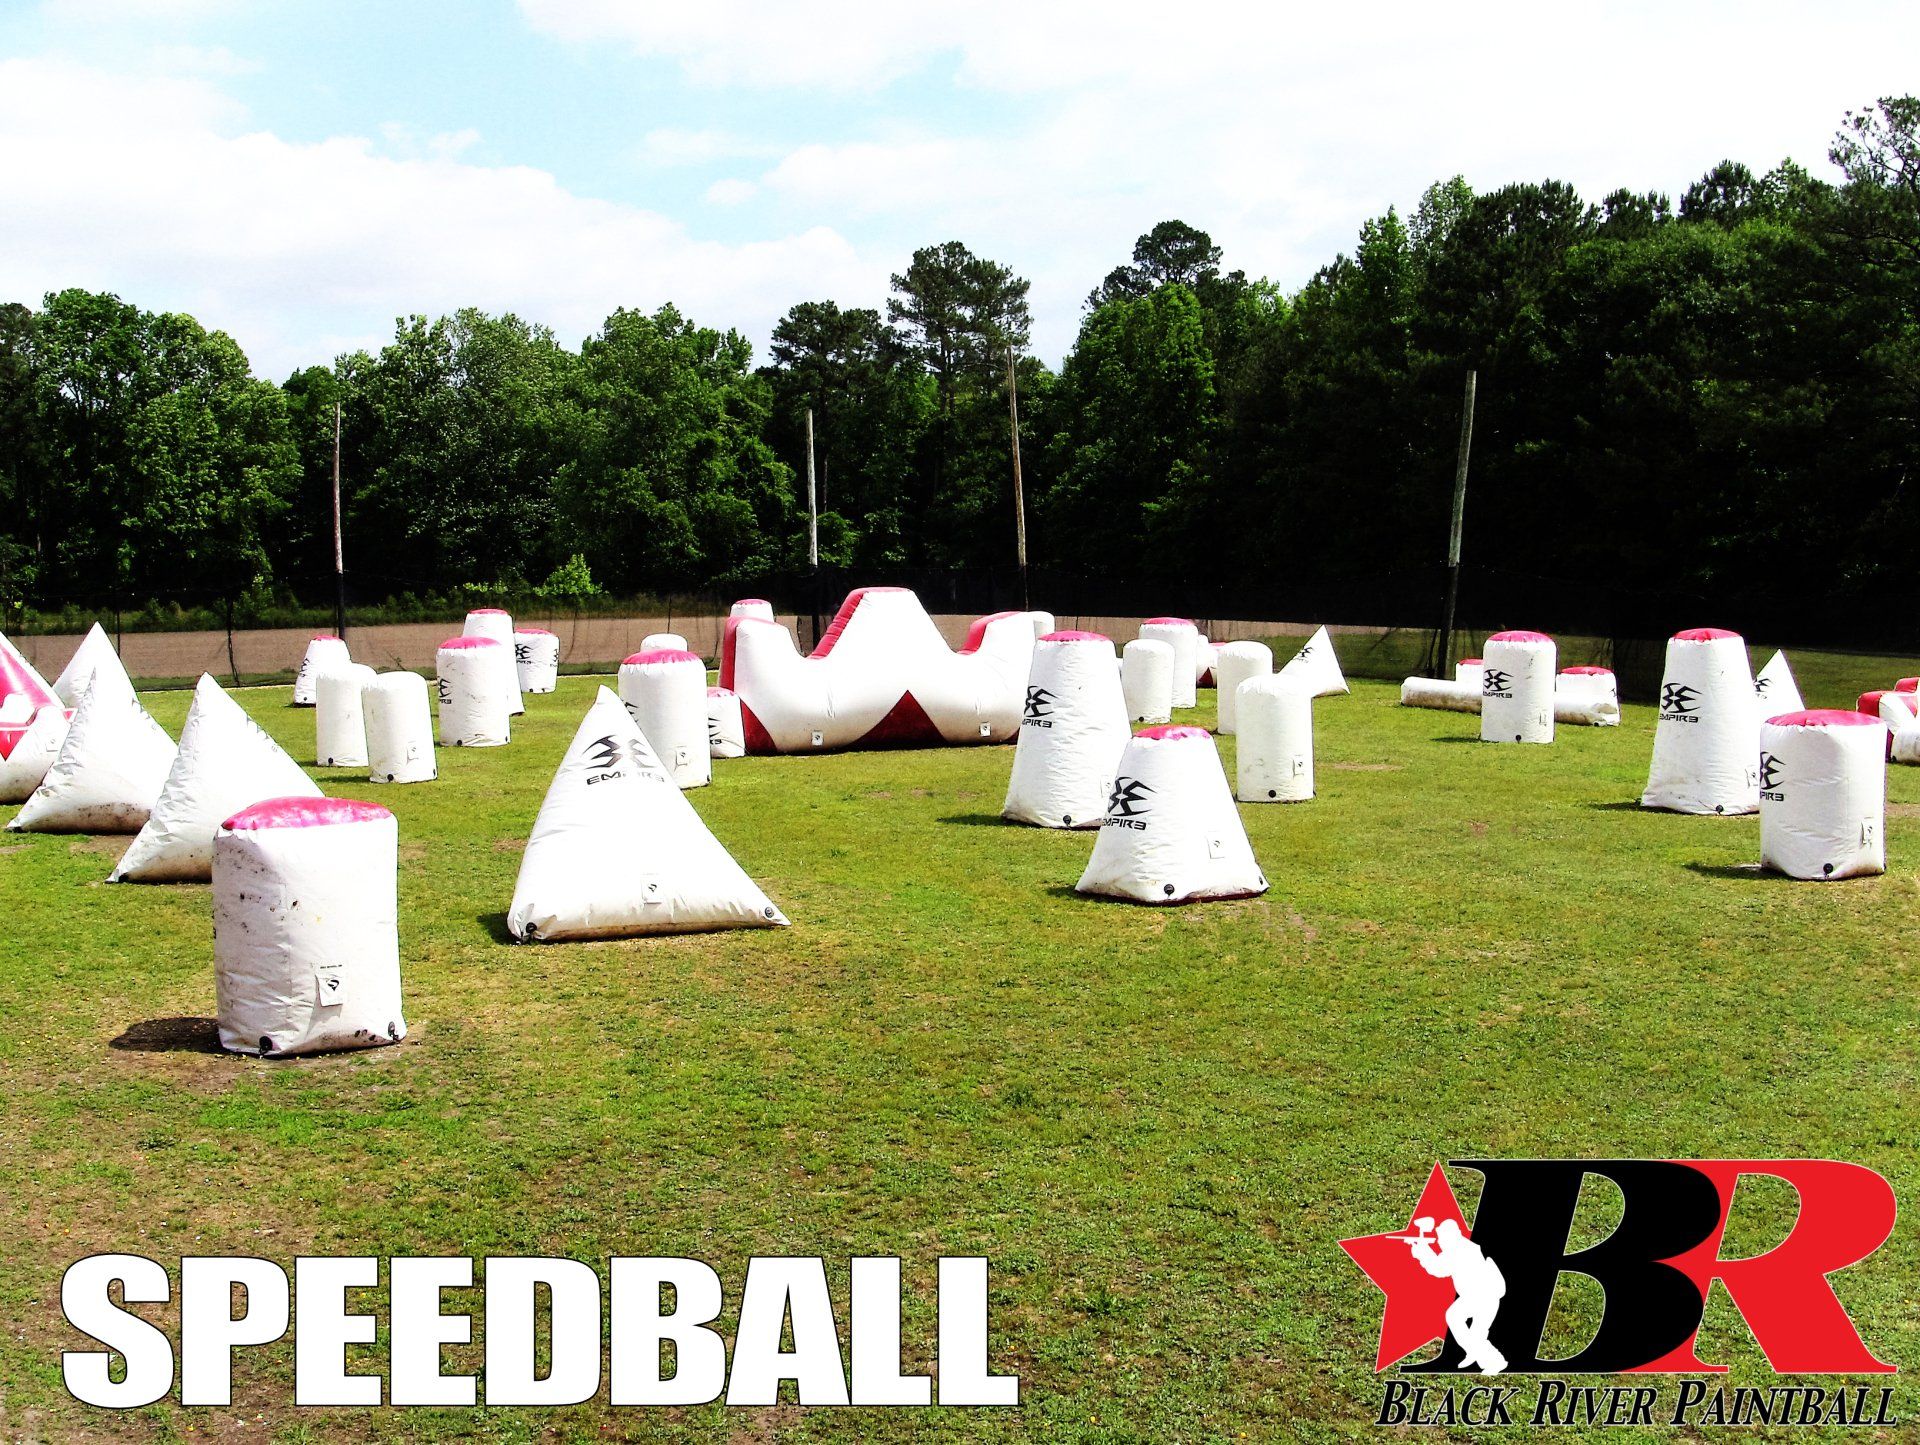 Speedball Field at Black River